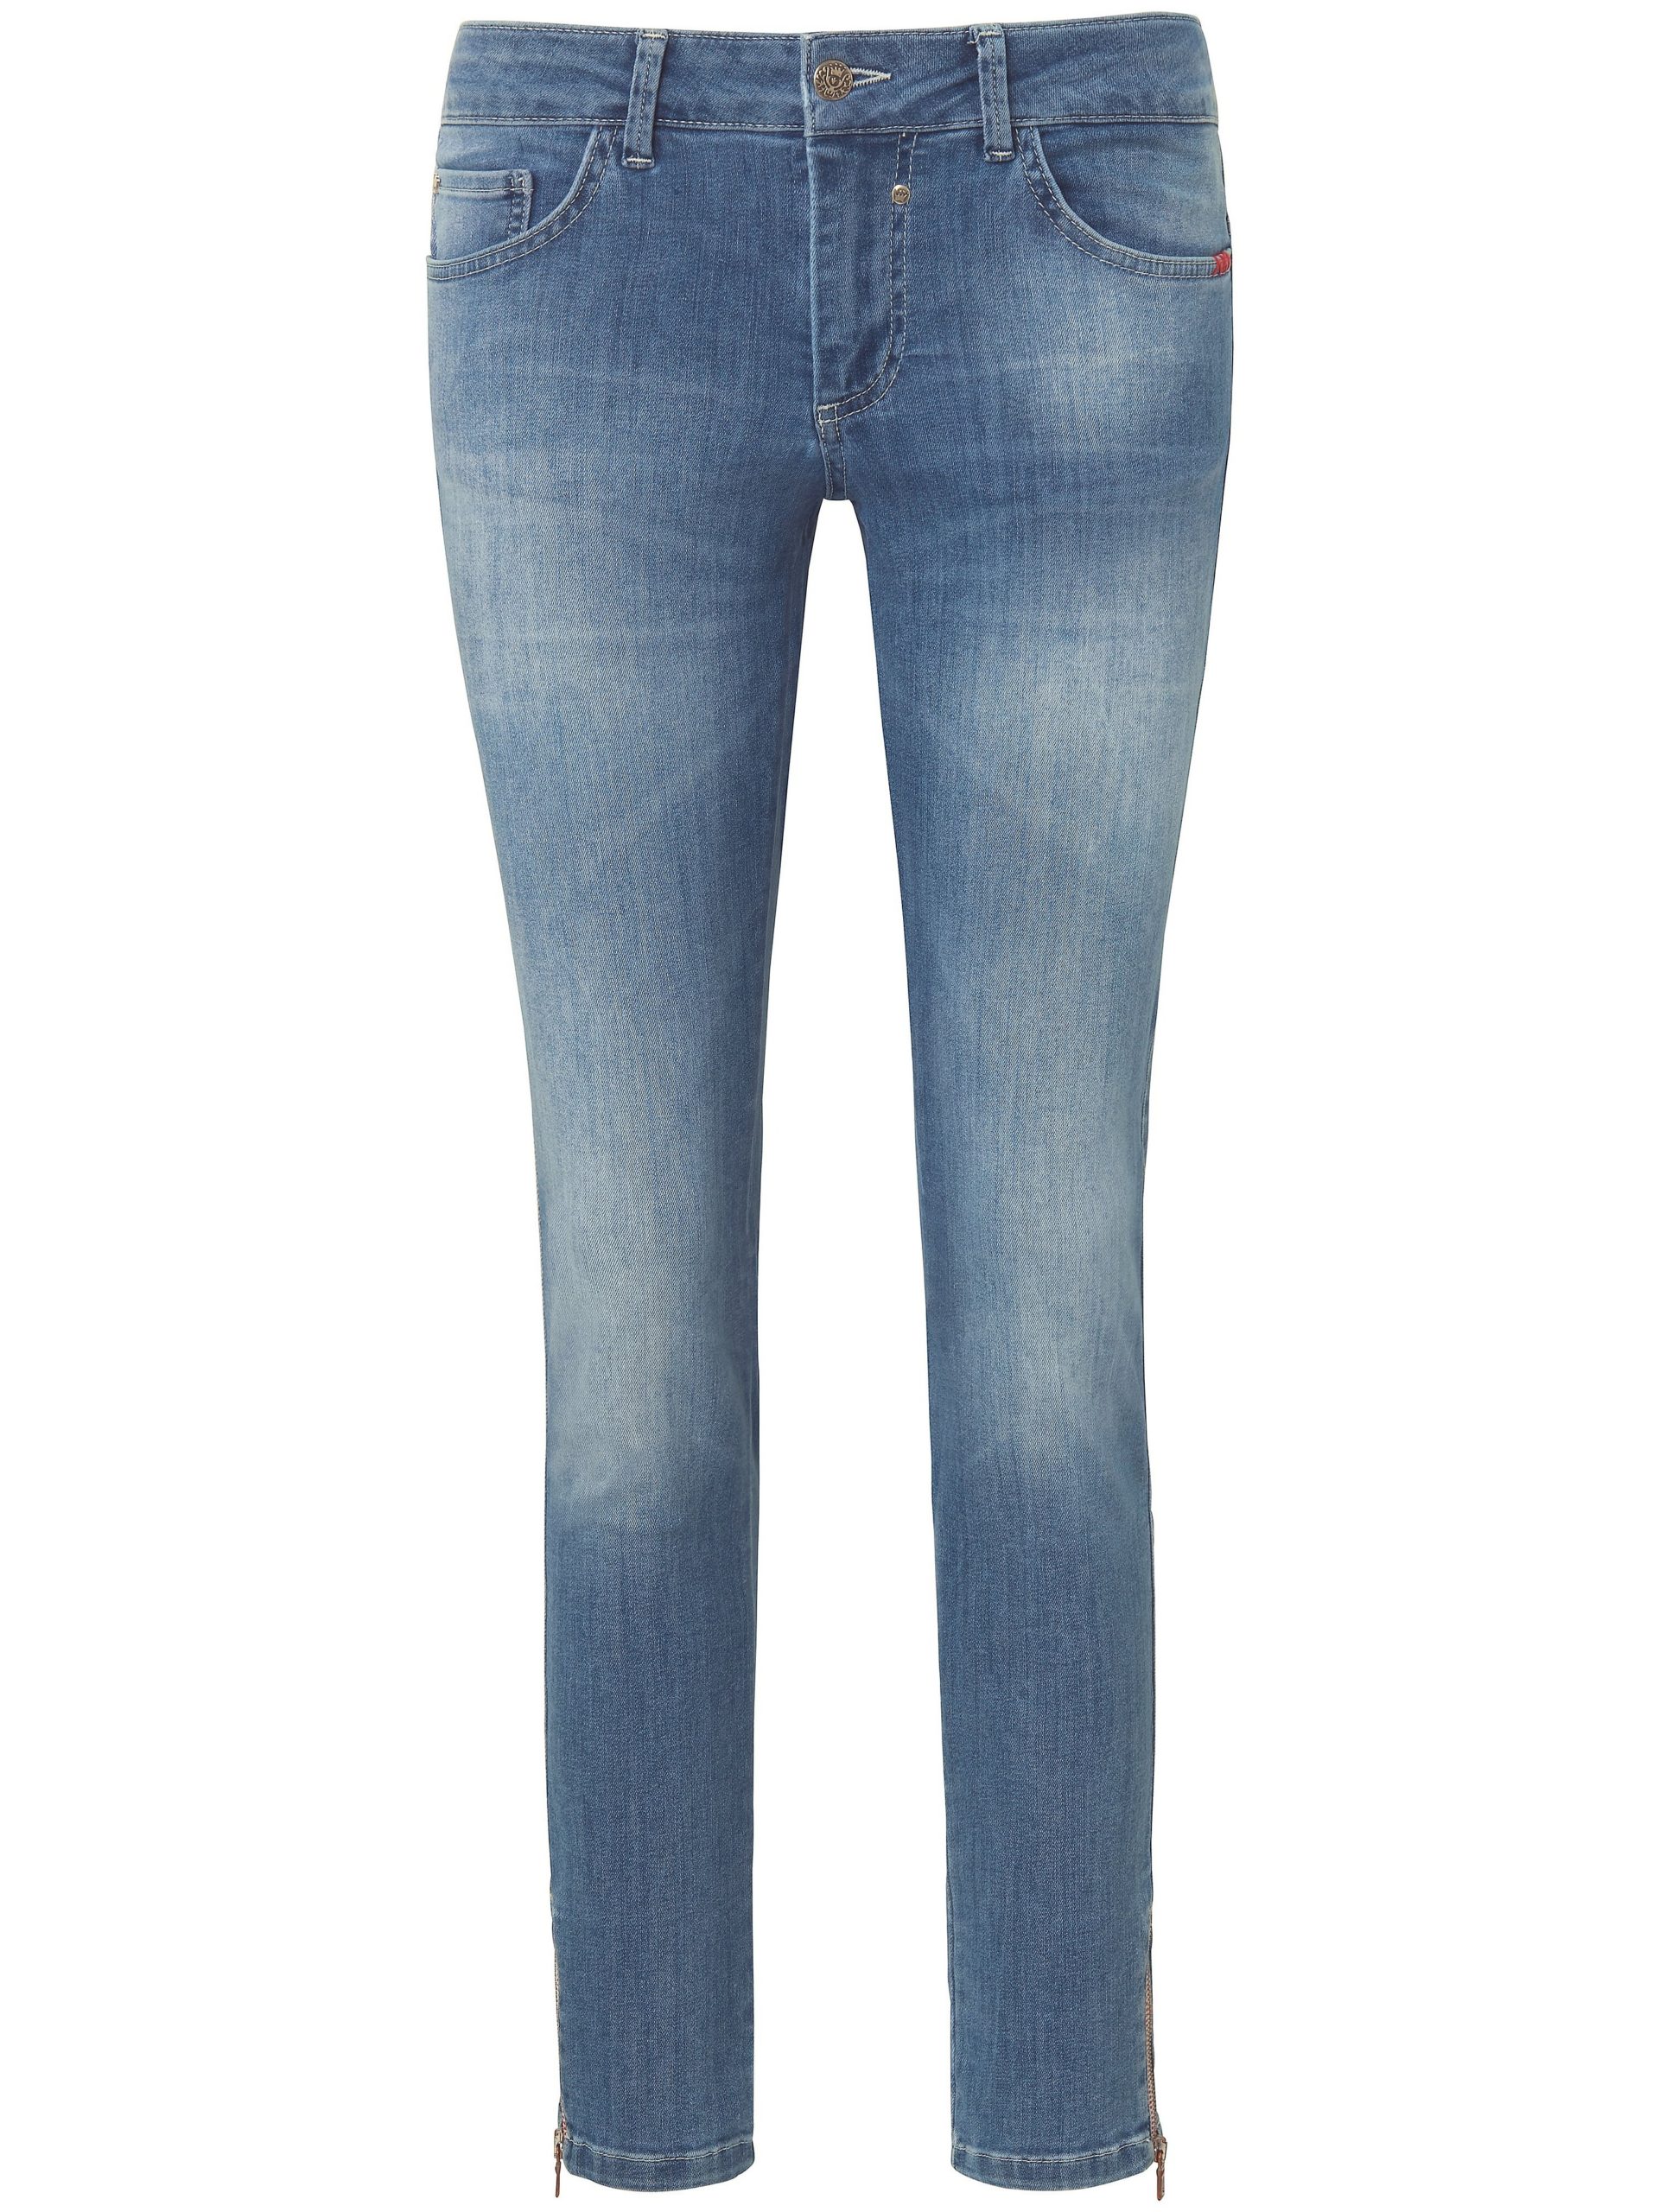 Enkellange Skinny jeans model Gill Van Glücksmoment denim Kopen